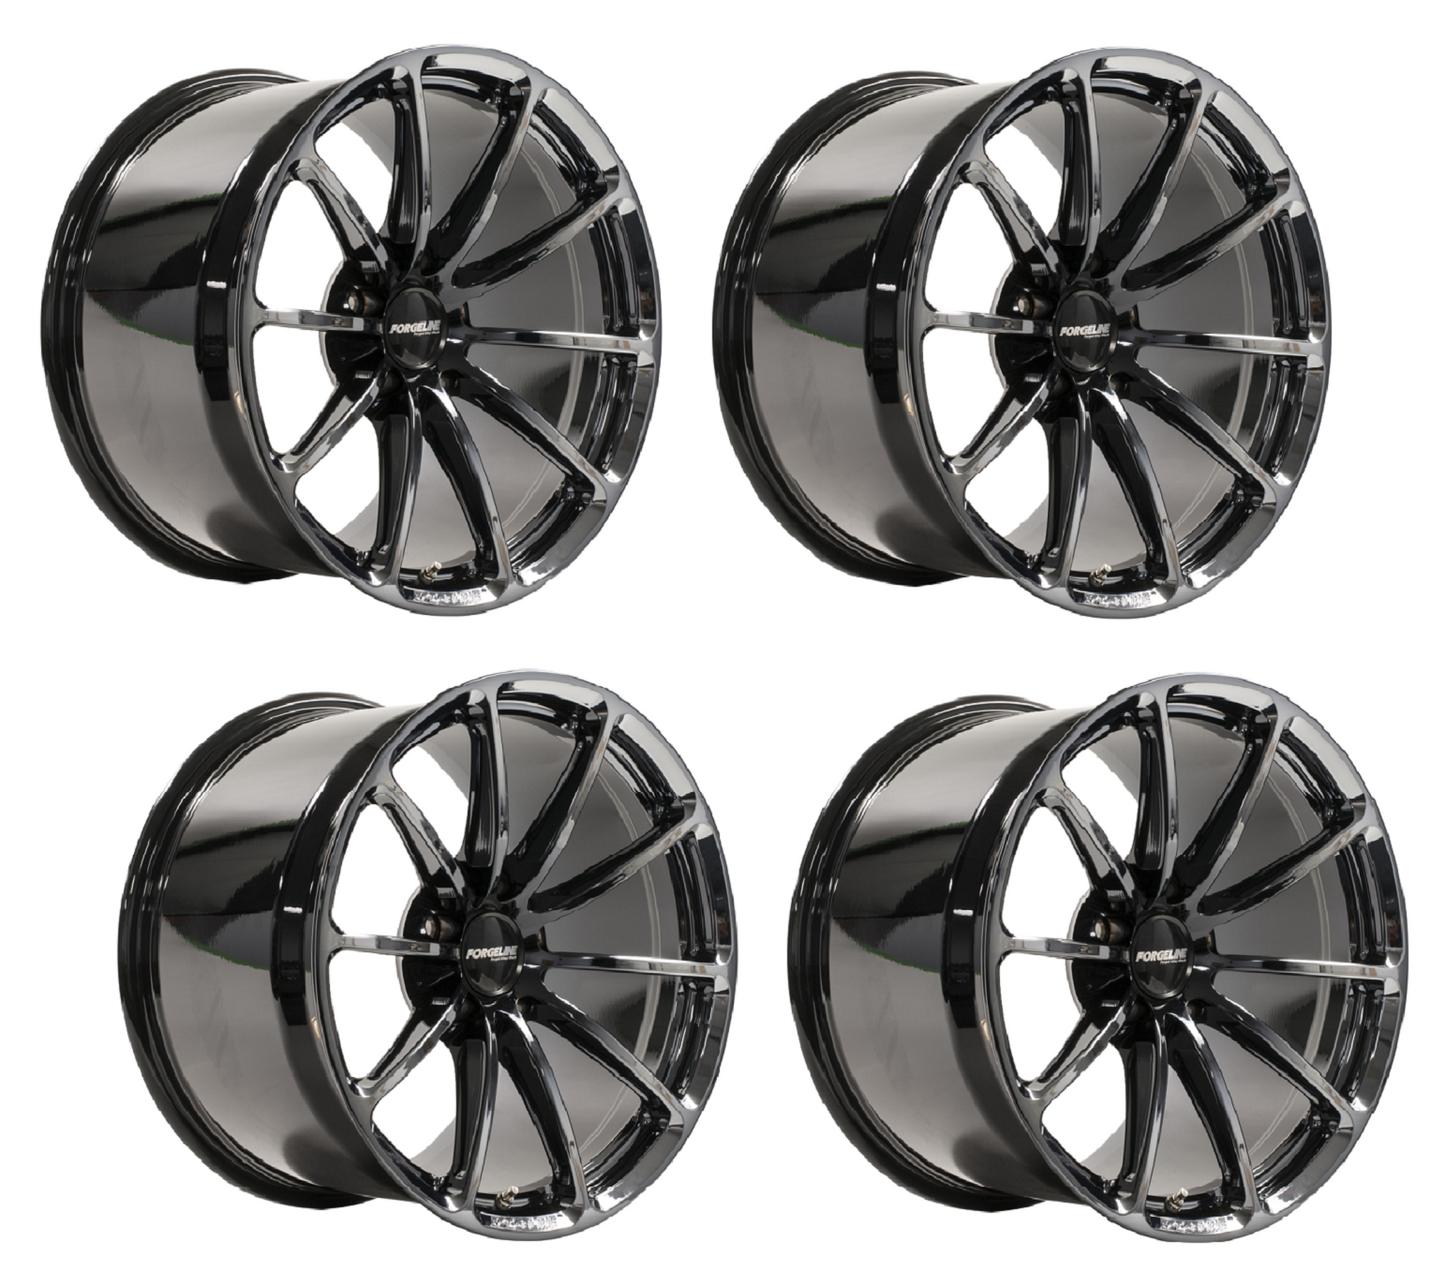 C5 Corvette Wheels: Forgeline GT1 - Black Chrome (Set)